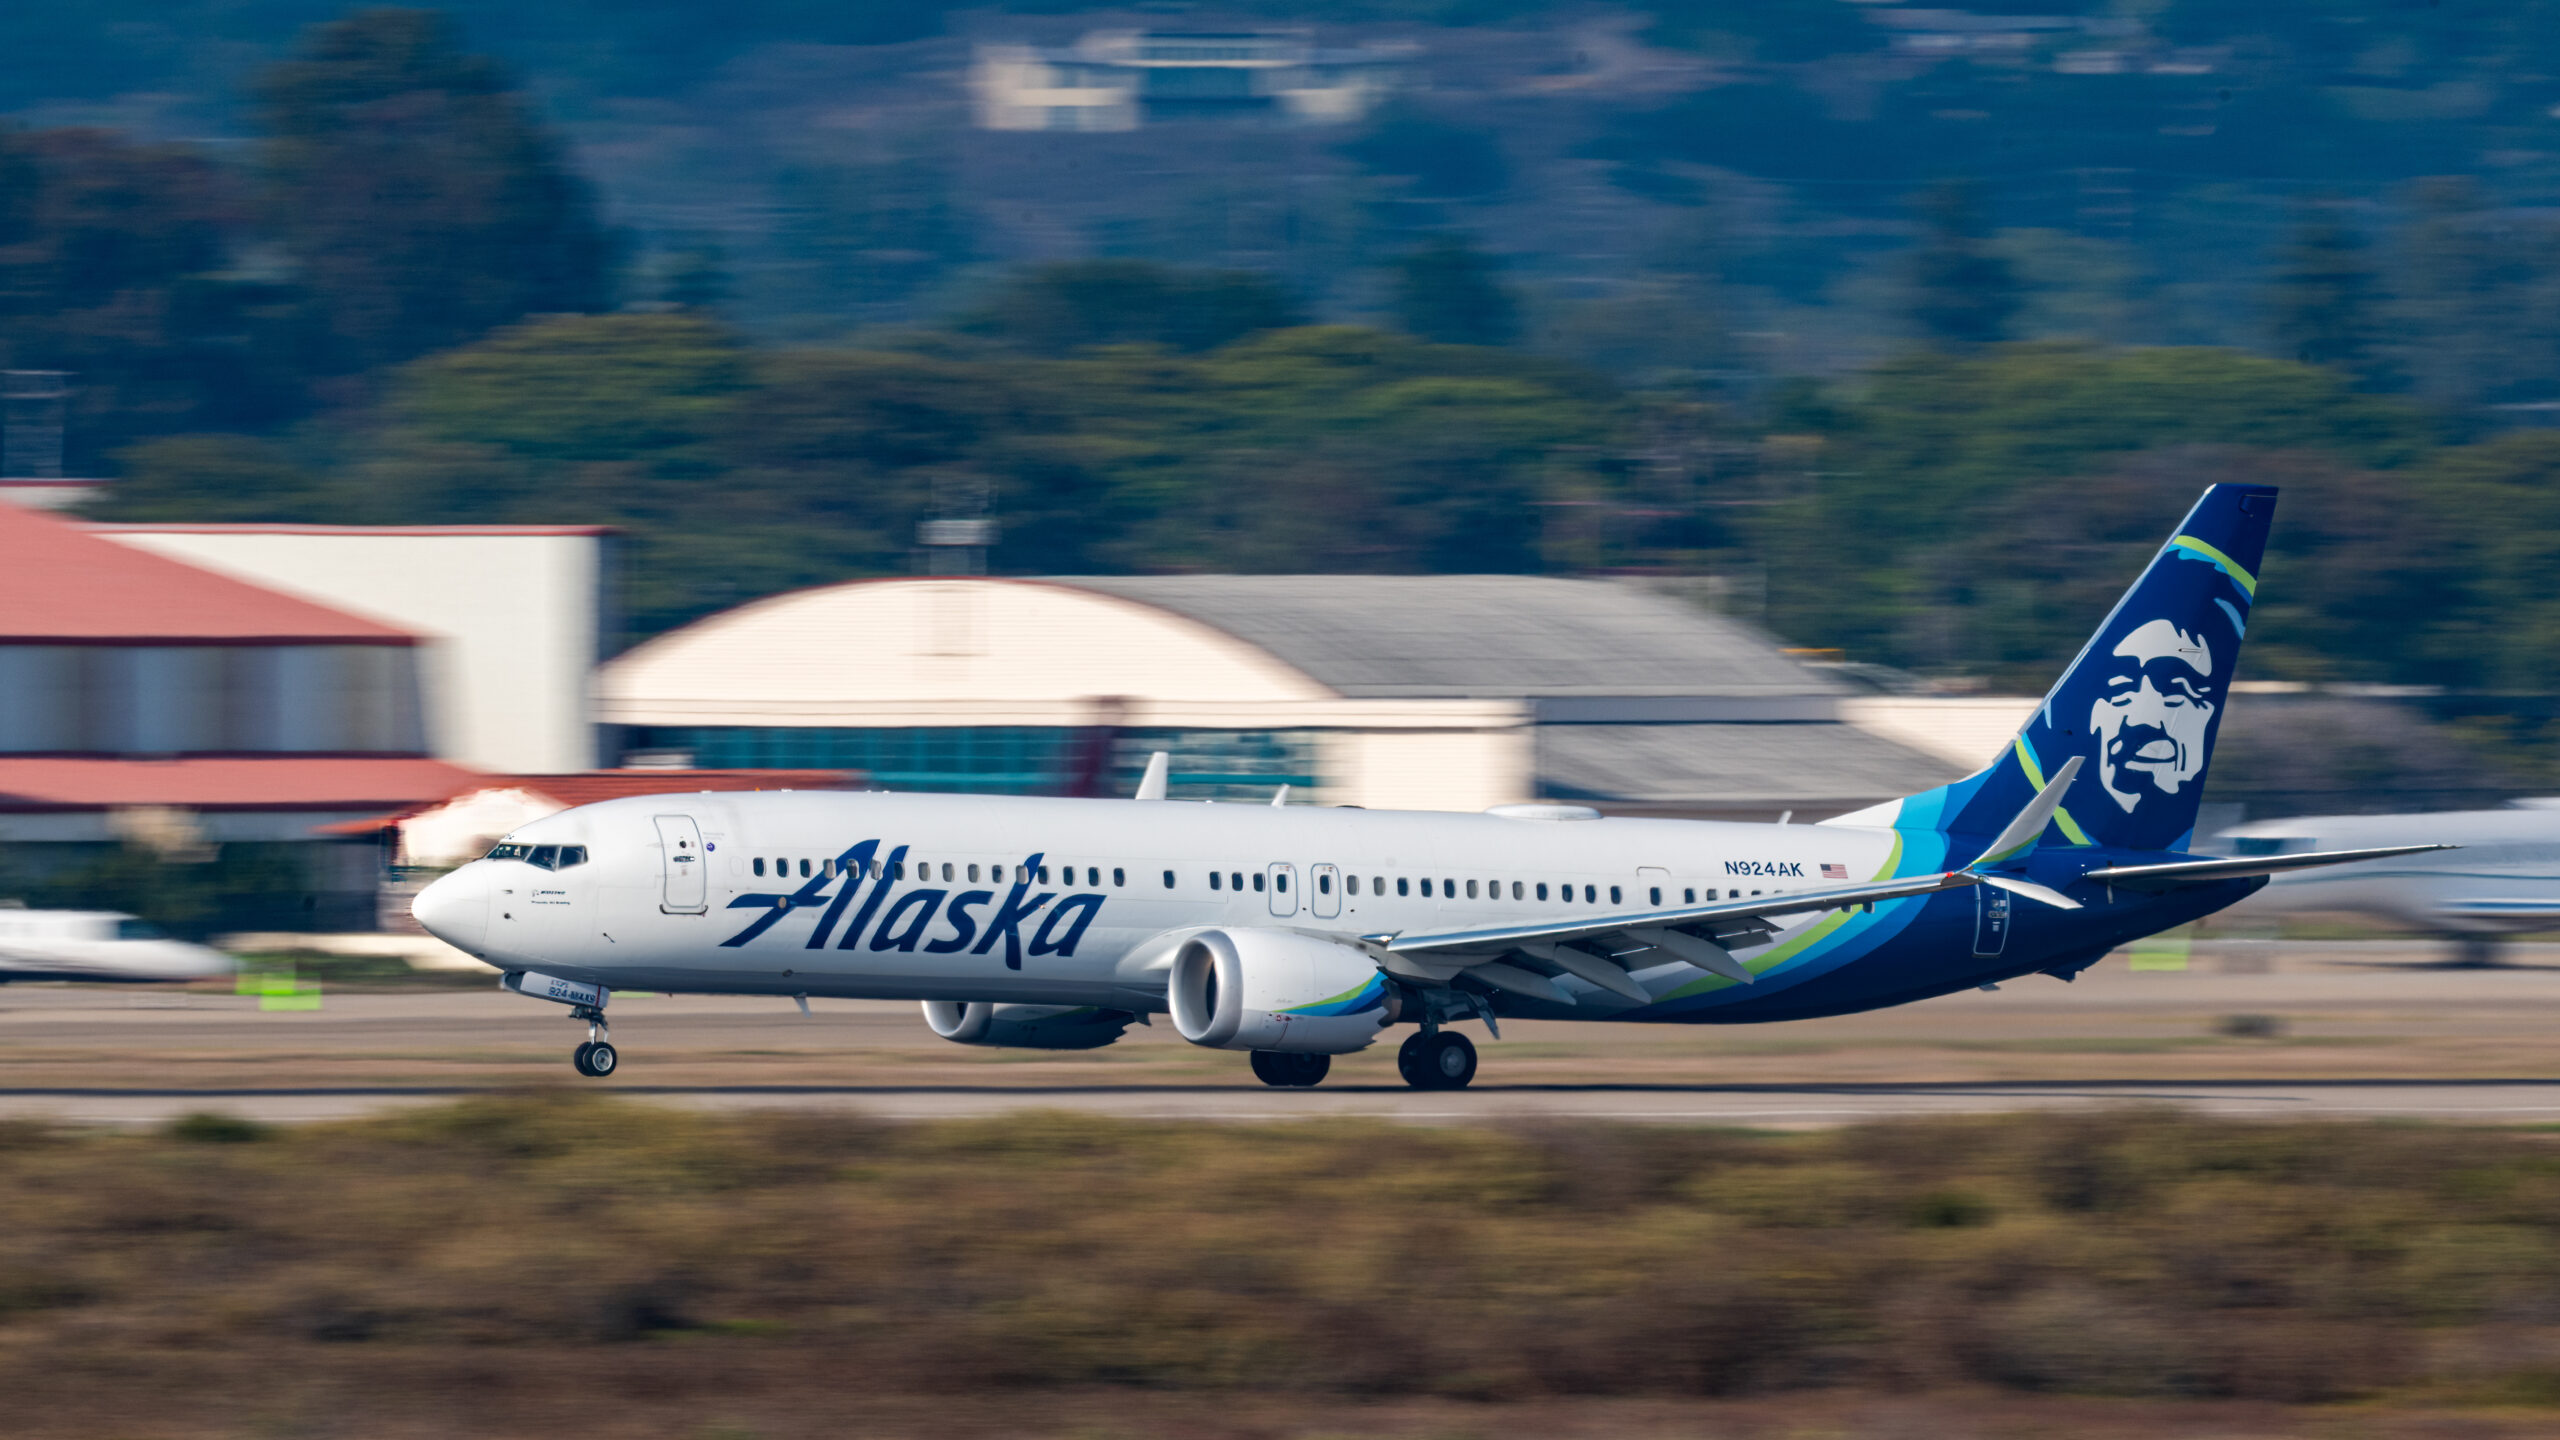 An Alaska Airlines MAX-9 jet